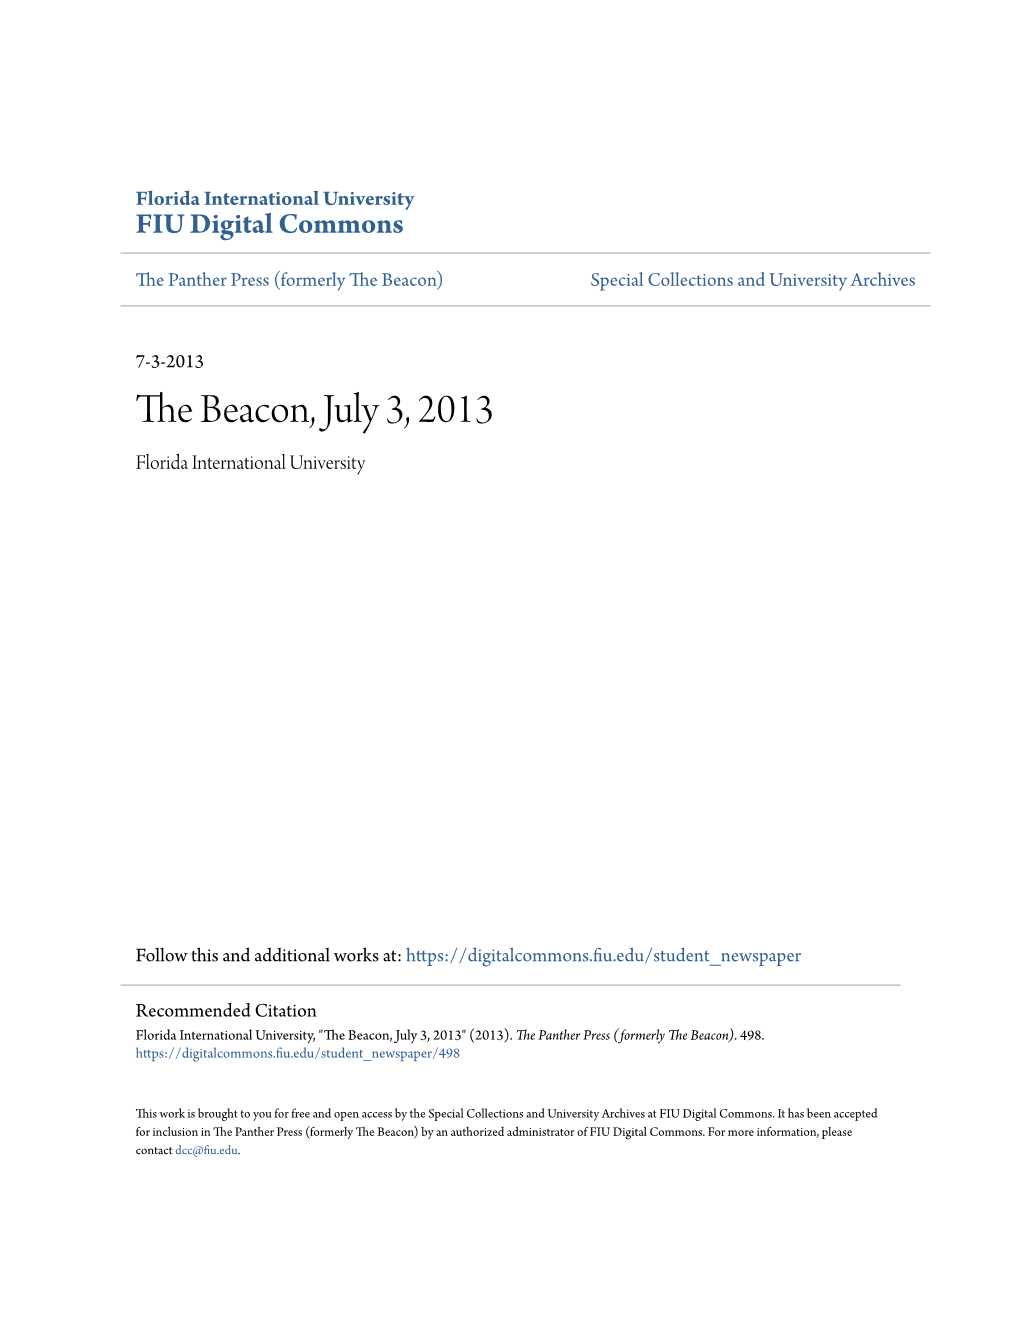 The Beacon, July 3, 2013 Florida International University